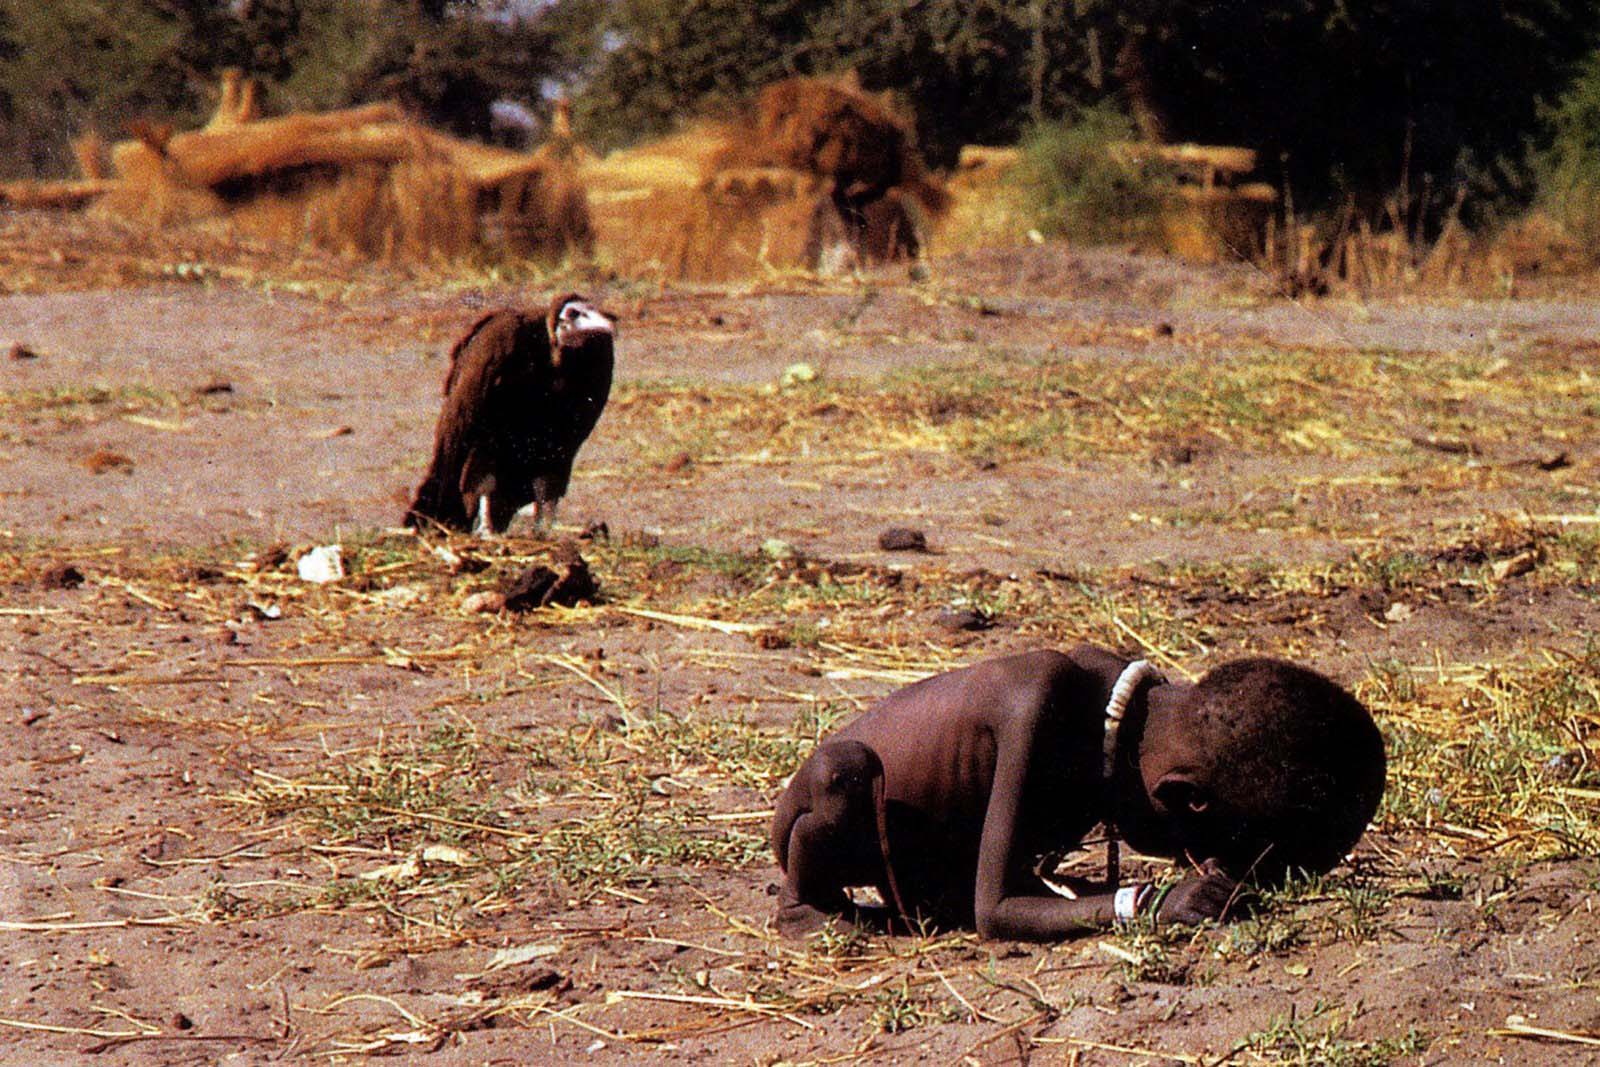 The vulture and the little girl - Kevin Carter, 1993. Tidak Adil? (source: http://rarehistoricalphotos.com/vulture-little-girl/)